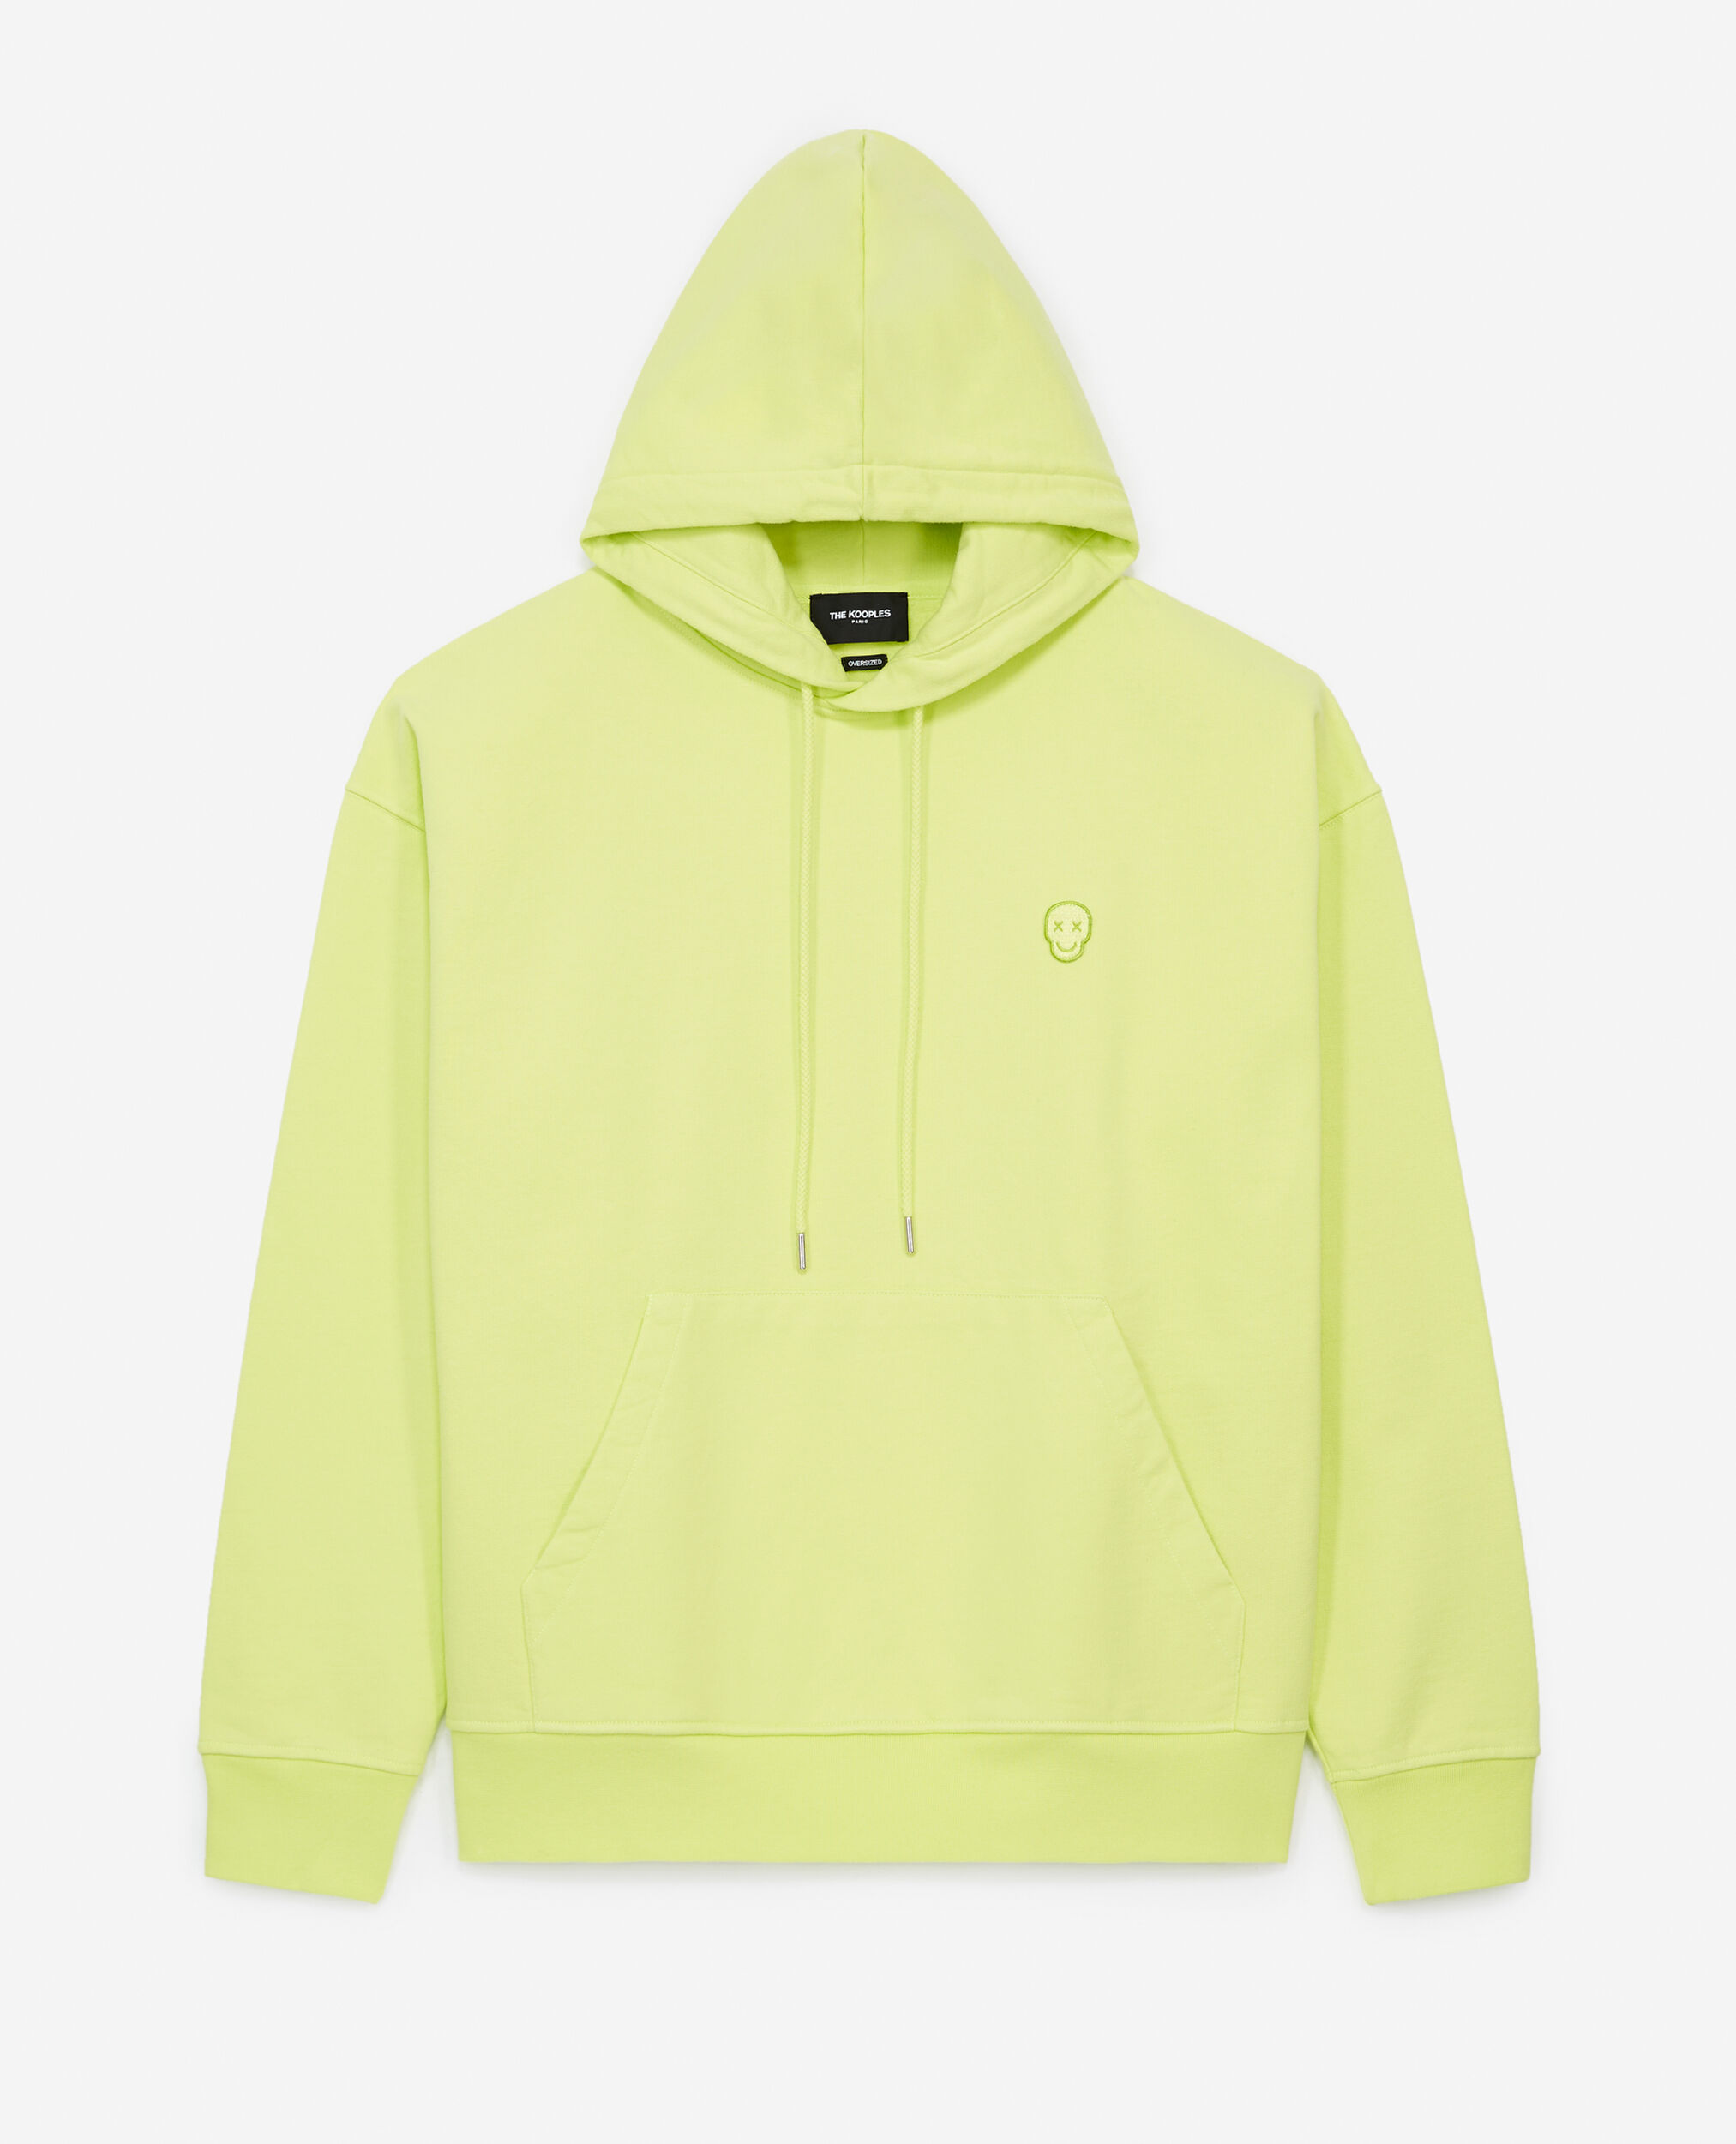 Hooded yellow sweatshirt in cotton with logo | The Kooples